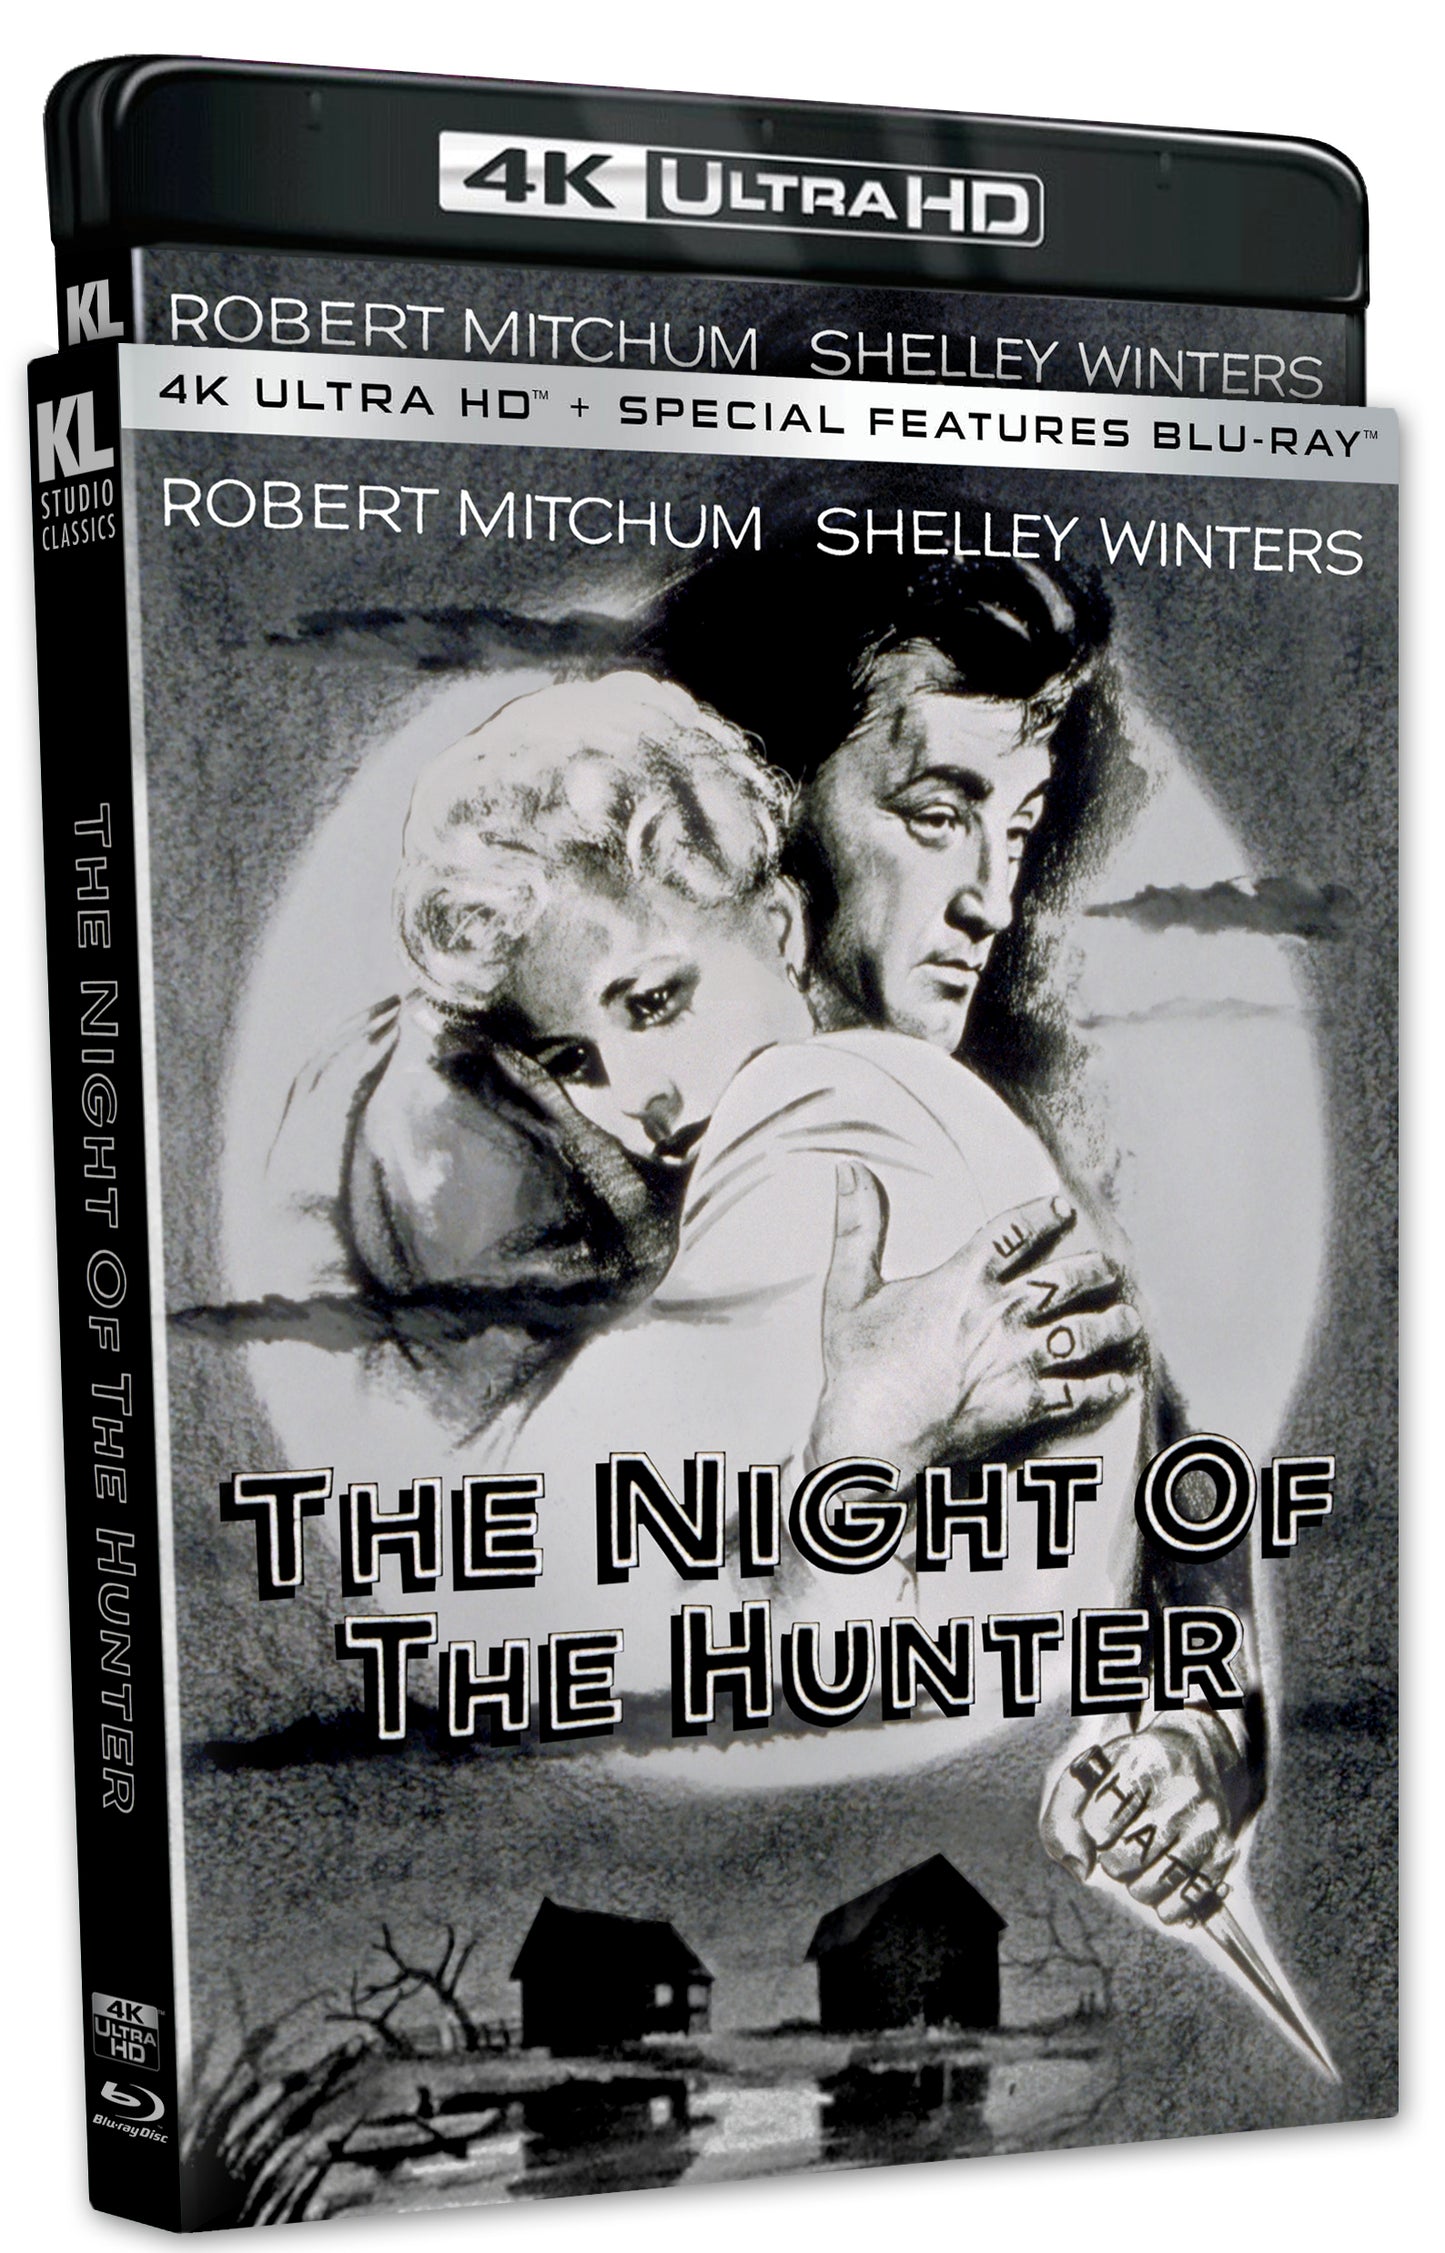 The Night of the Hunter Kino Lorber 4K UHD/Blu-Ray [NEW] [SLIPCOVER]